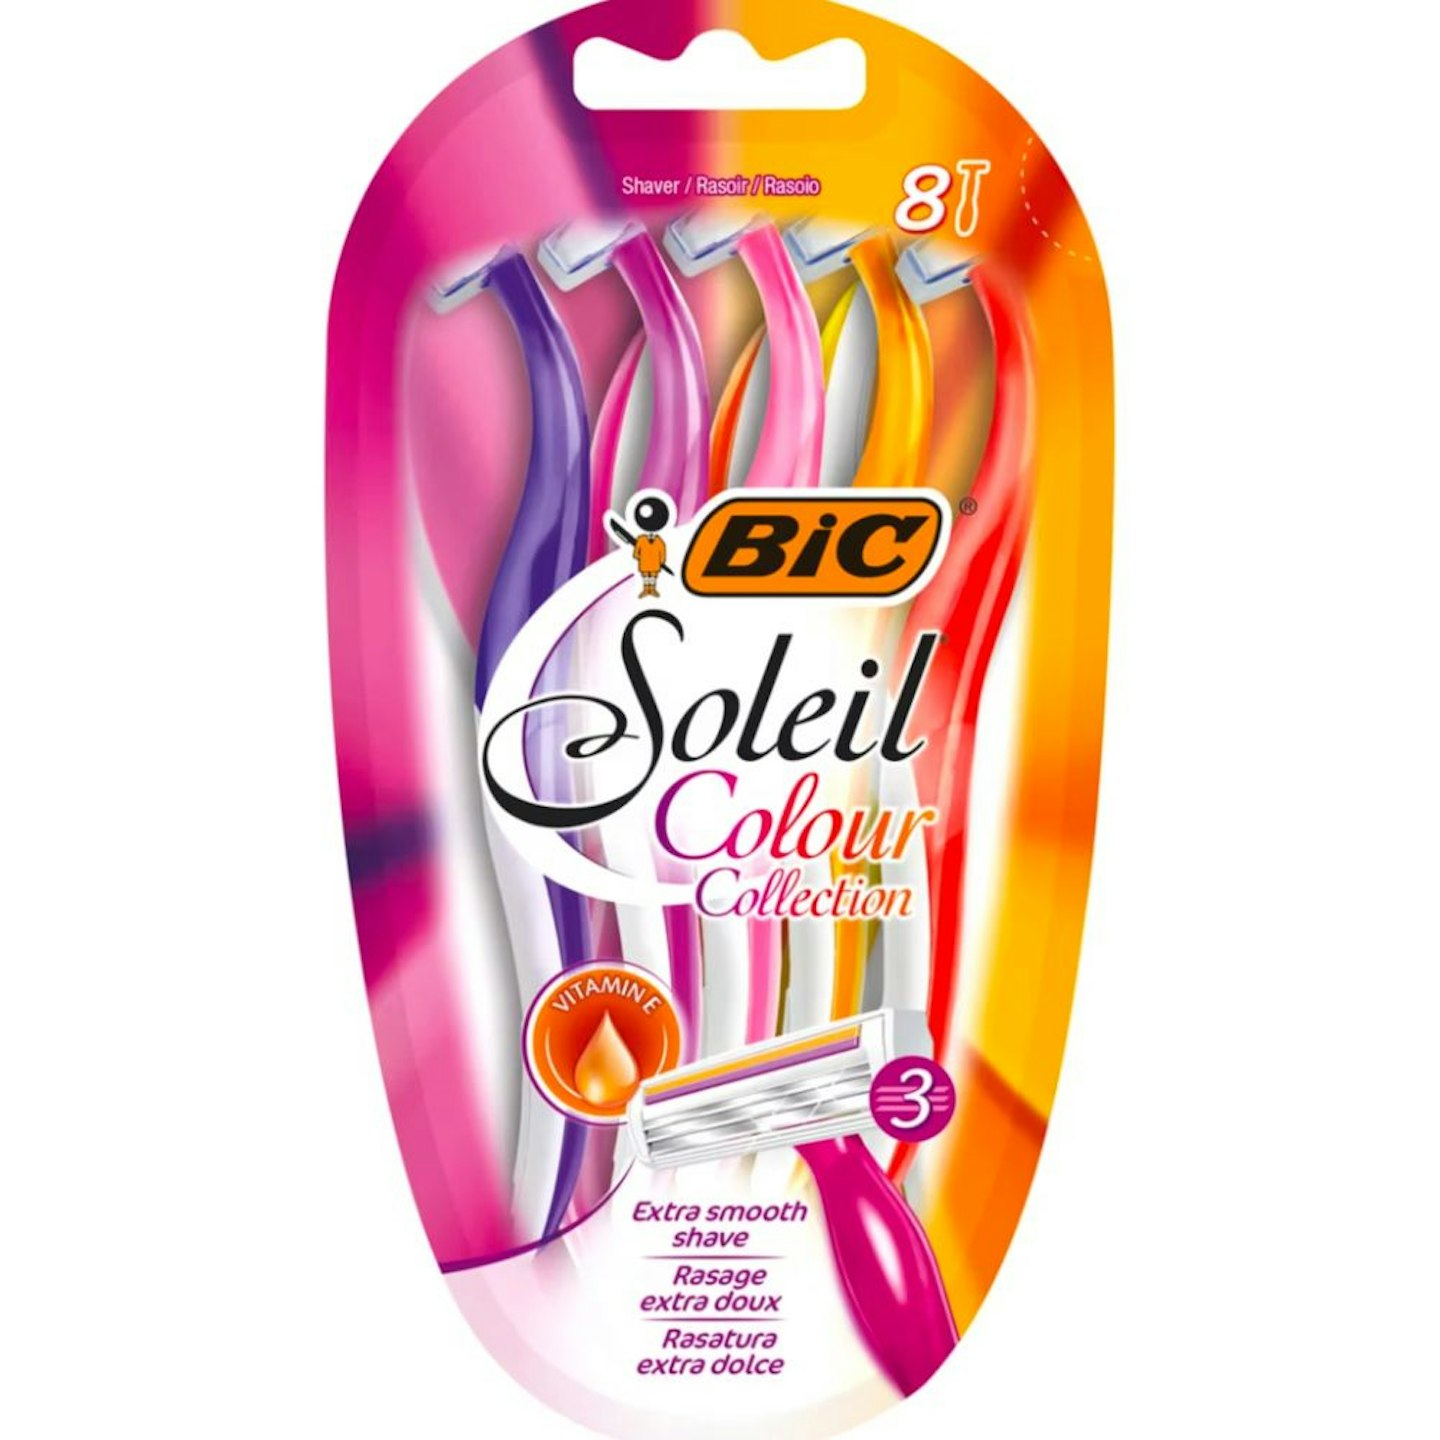 BIC Soleil Colour Collection Disposable Women's Razors 8 Pack